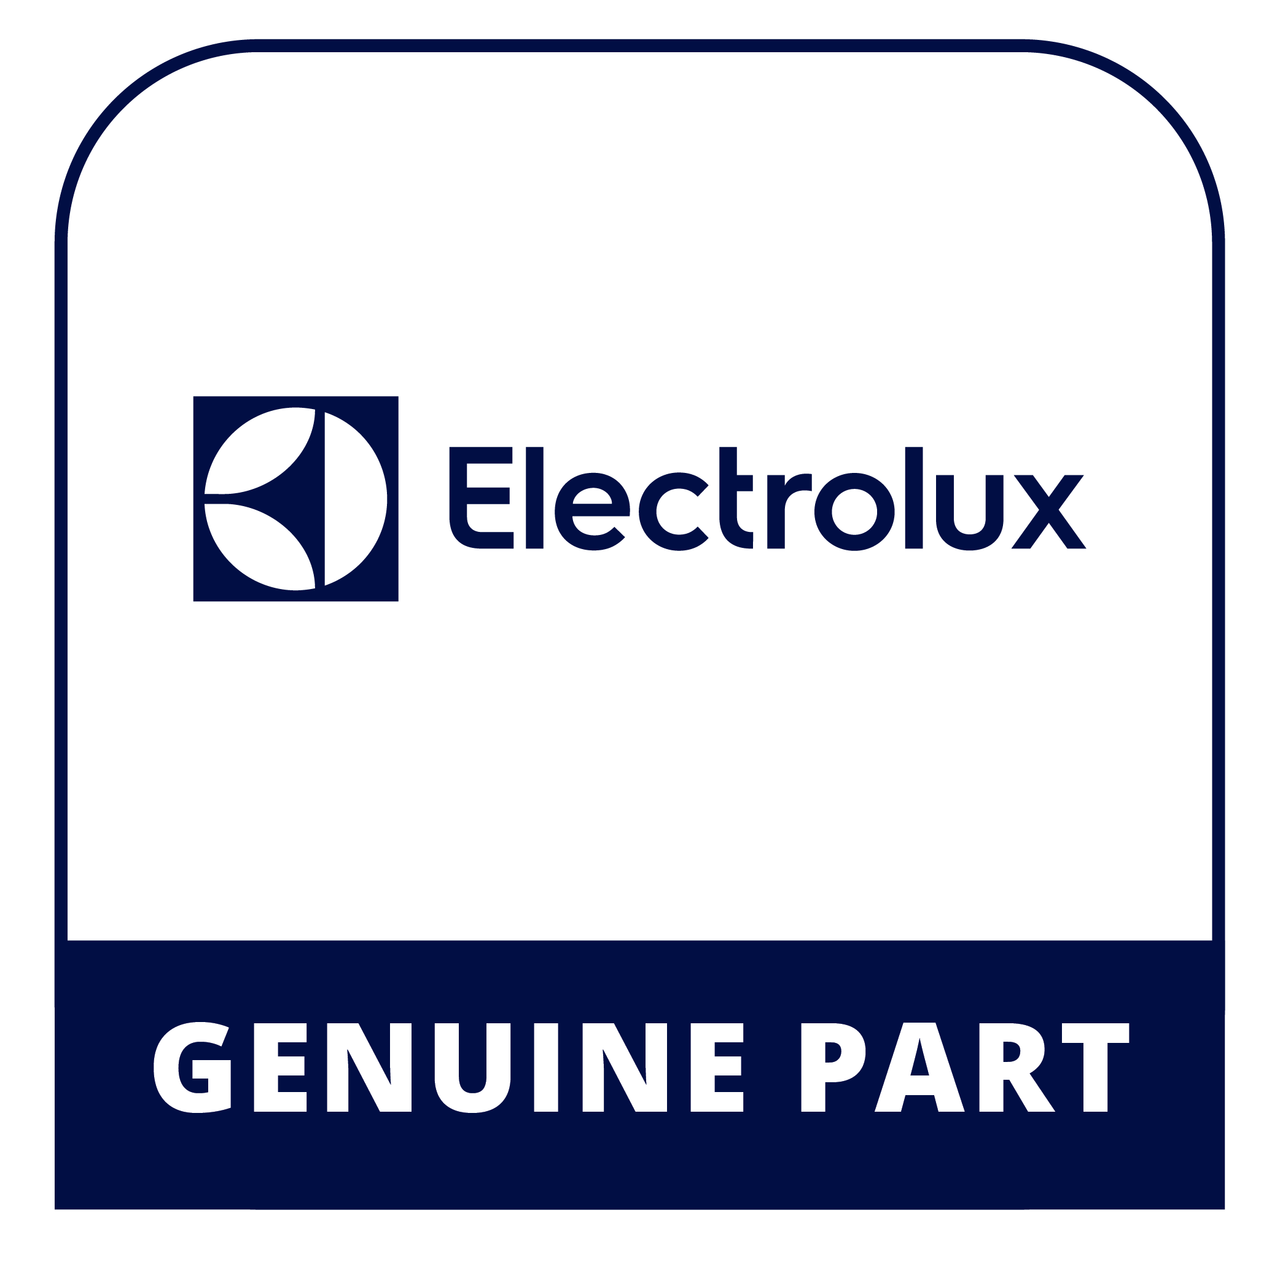 Frigidaire - Electrolux 316572443 Panel - Genuine Electrolux Part